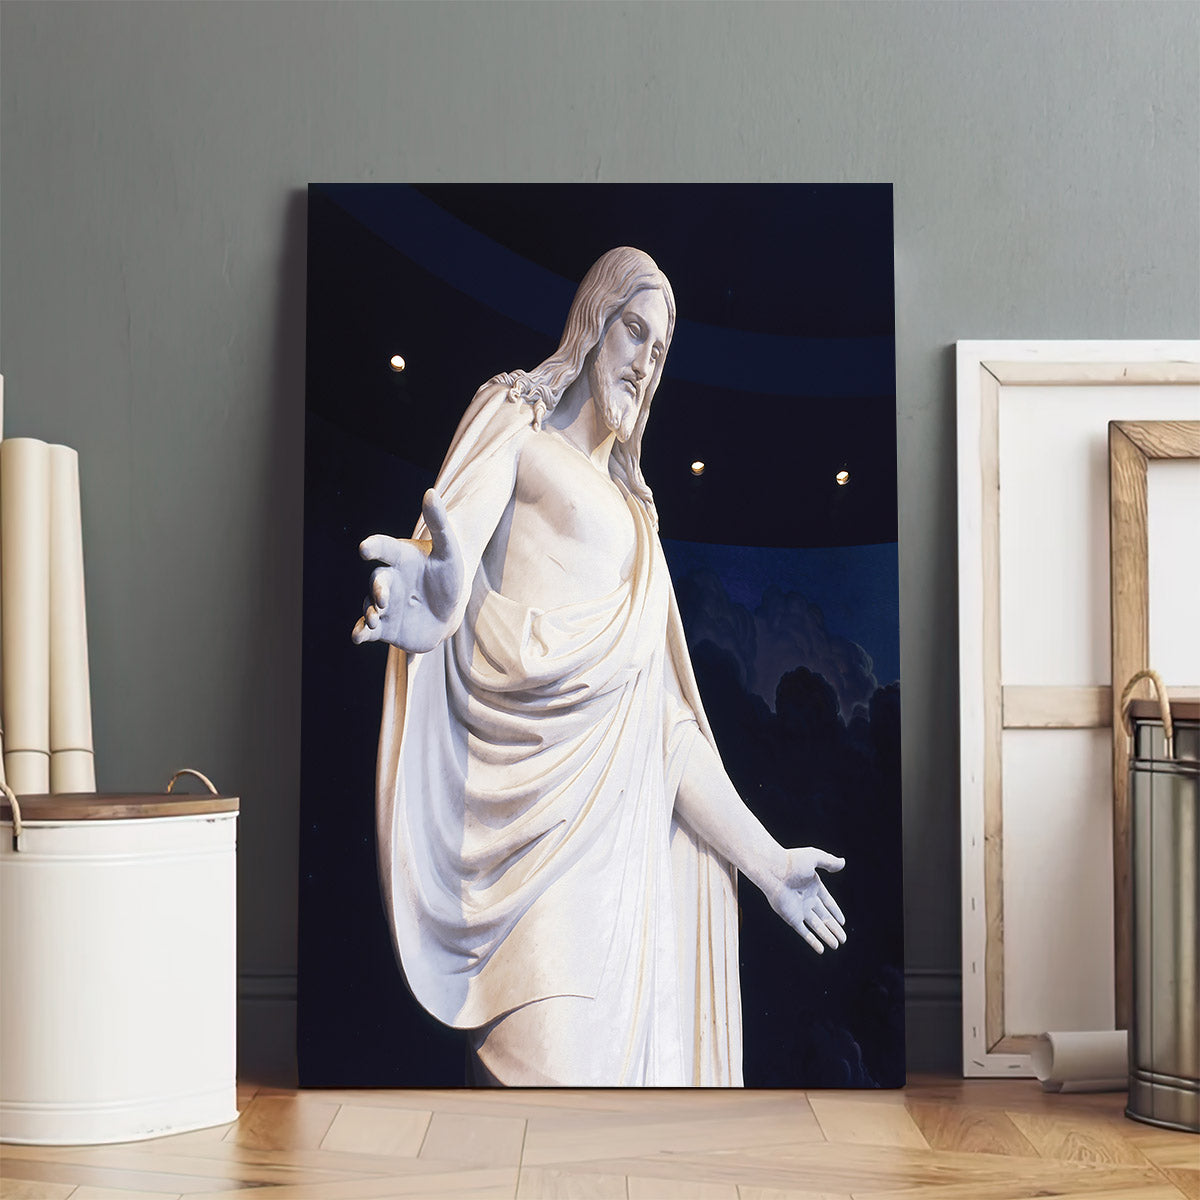 Replica Of Bertel Thorvaldsen’s Christus Canvas Pictures - Religious Canvas Wall Art - Scriptures Wall Decor